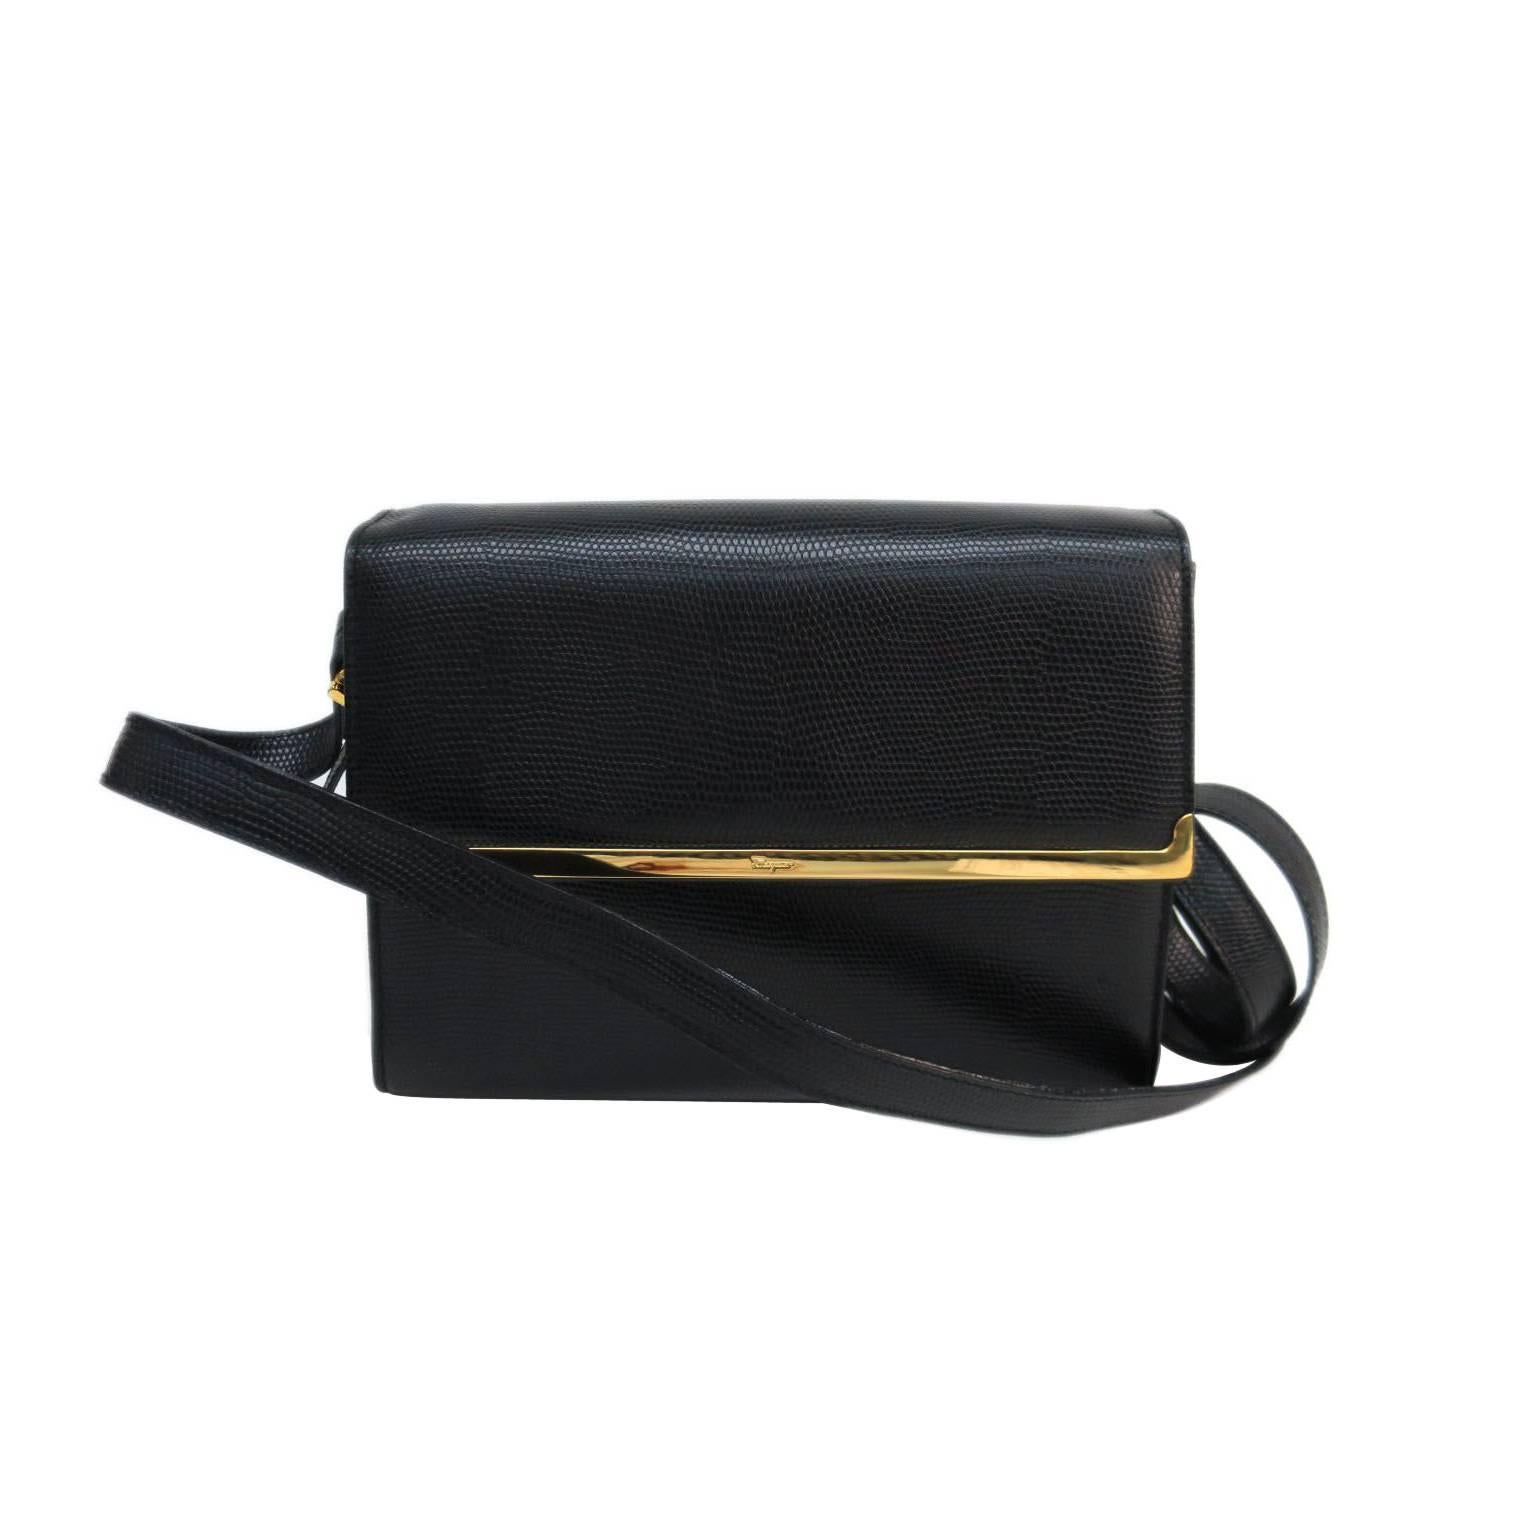 Salvatore Ferragamo Black Leather Flap Gold Hardware Crossbody Shoulder Bag